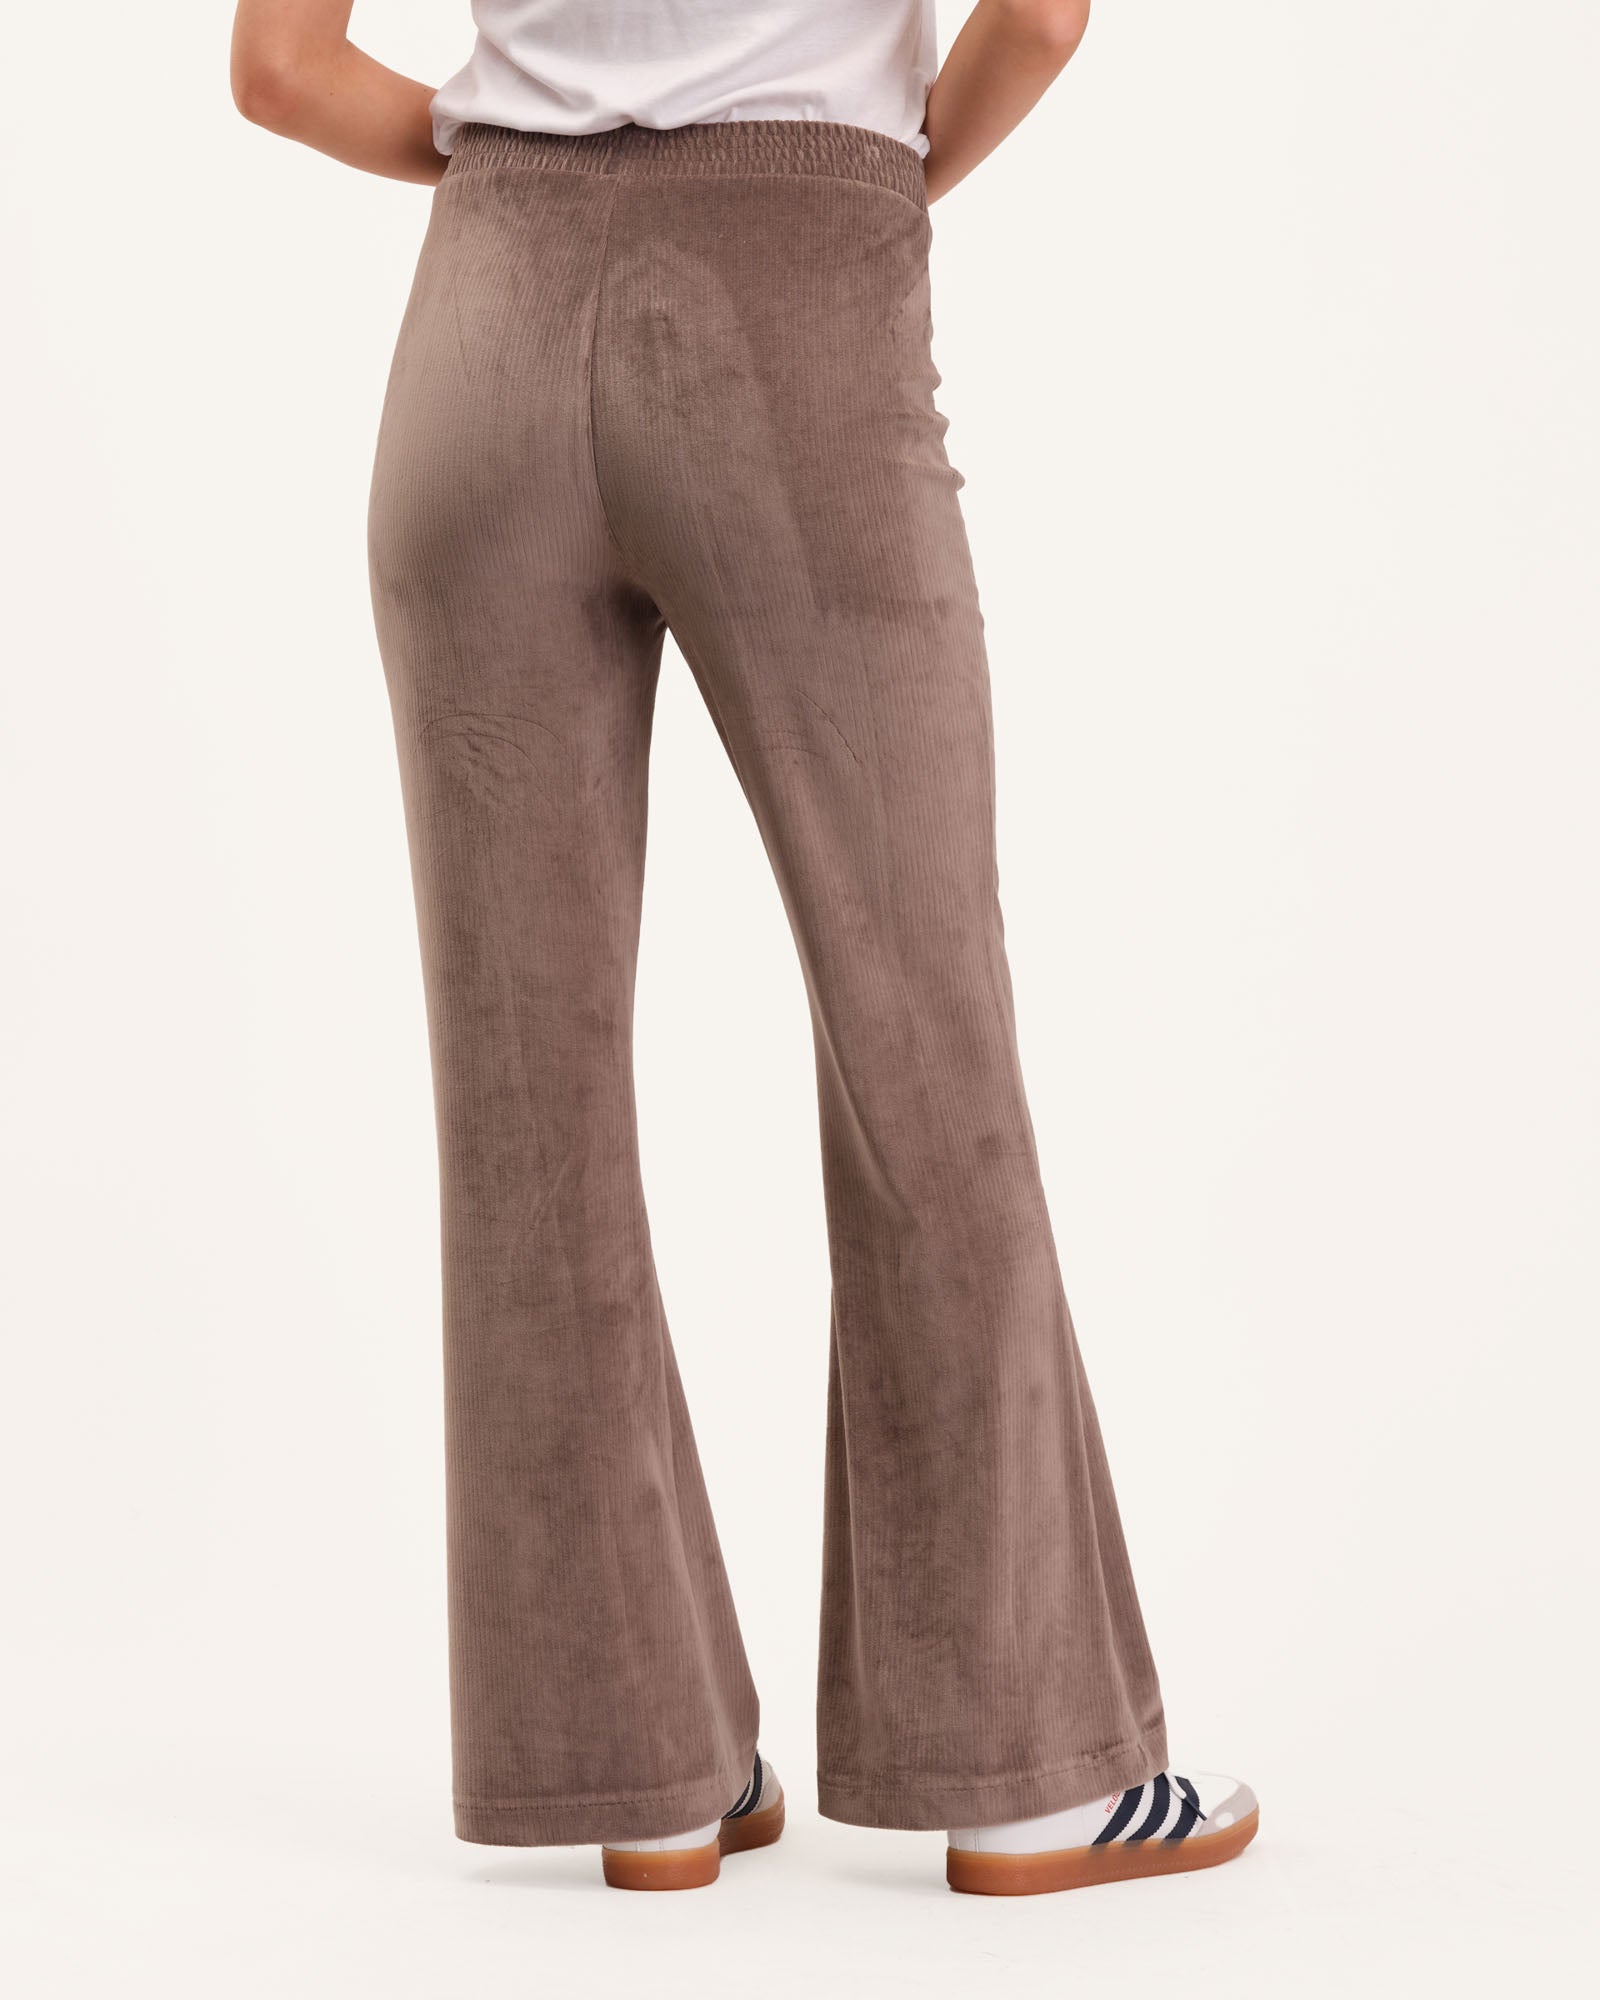 Women's Pull on Corduroy Flare Pants Elastic Waist Classic